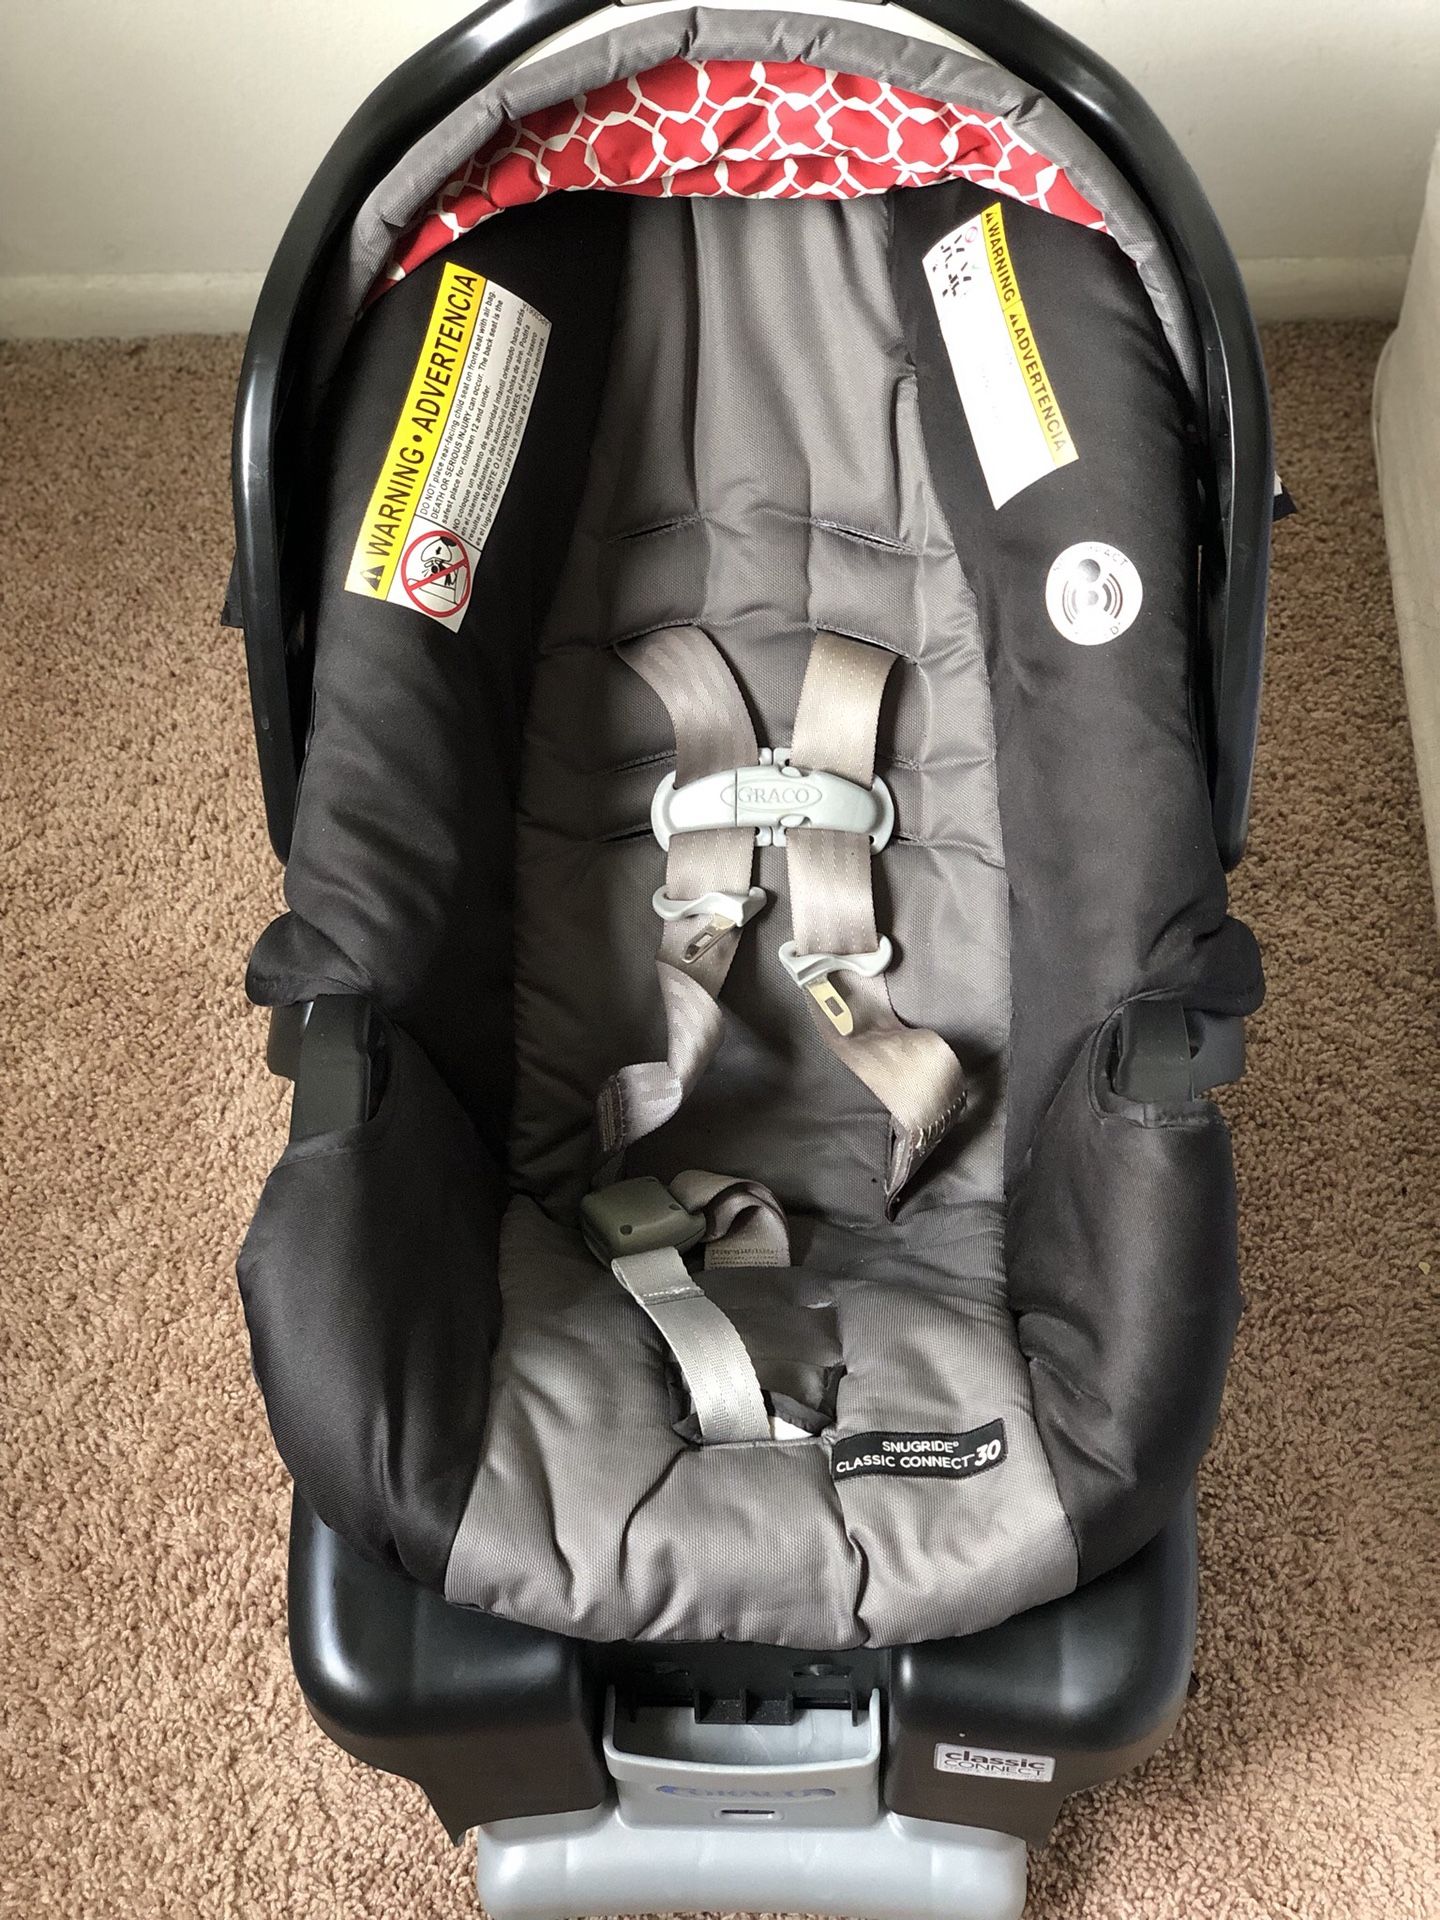 Graco infants car seat